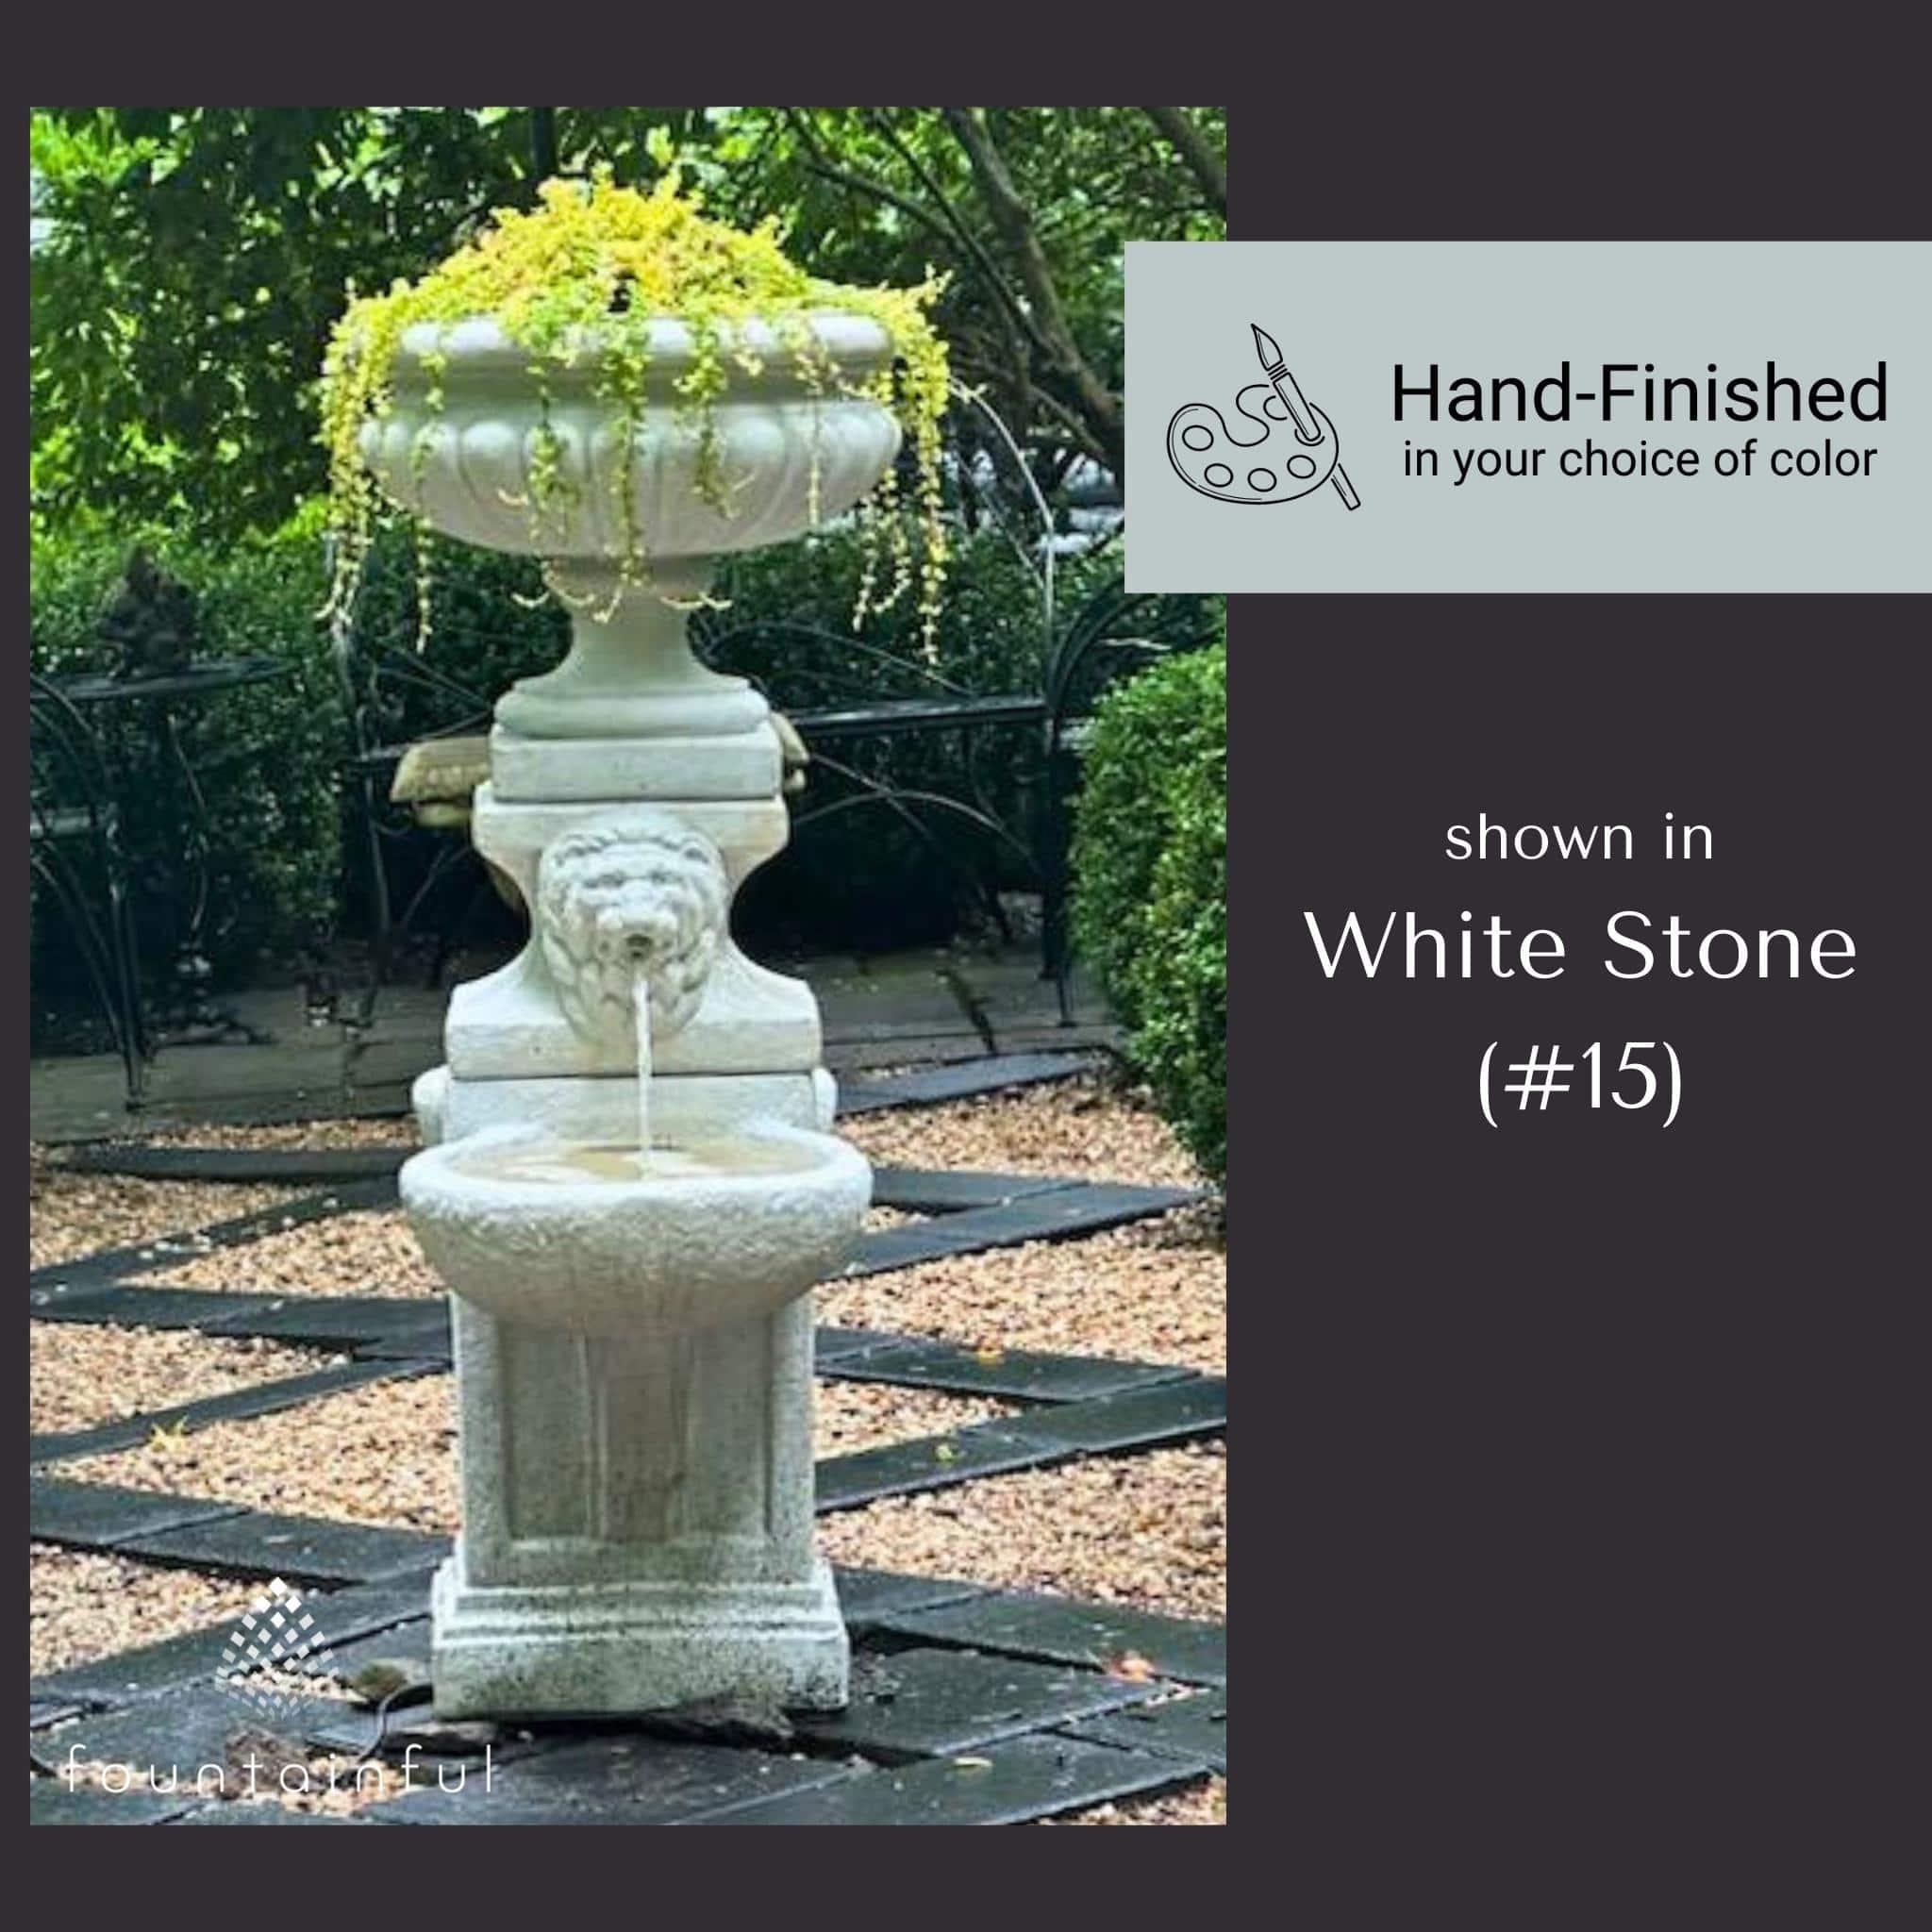 Lion Head 2-Bowl Concrete Fountain w/Milano Planter Urn - Massarellis #3527